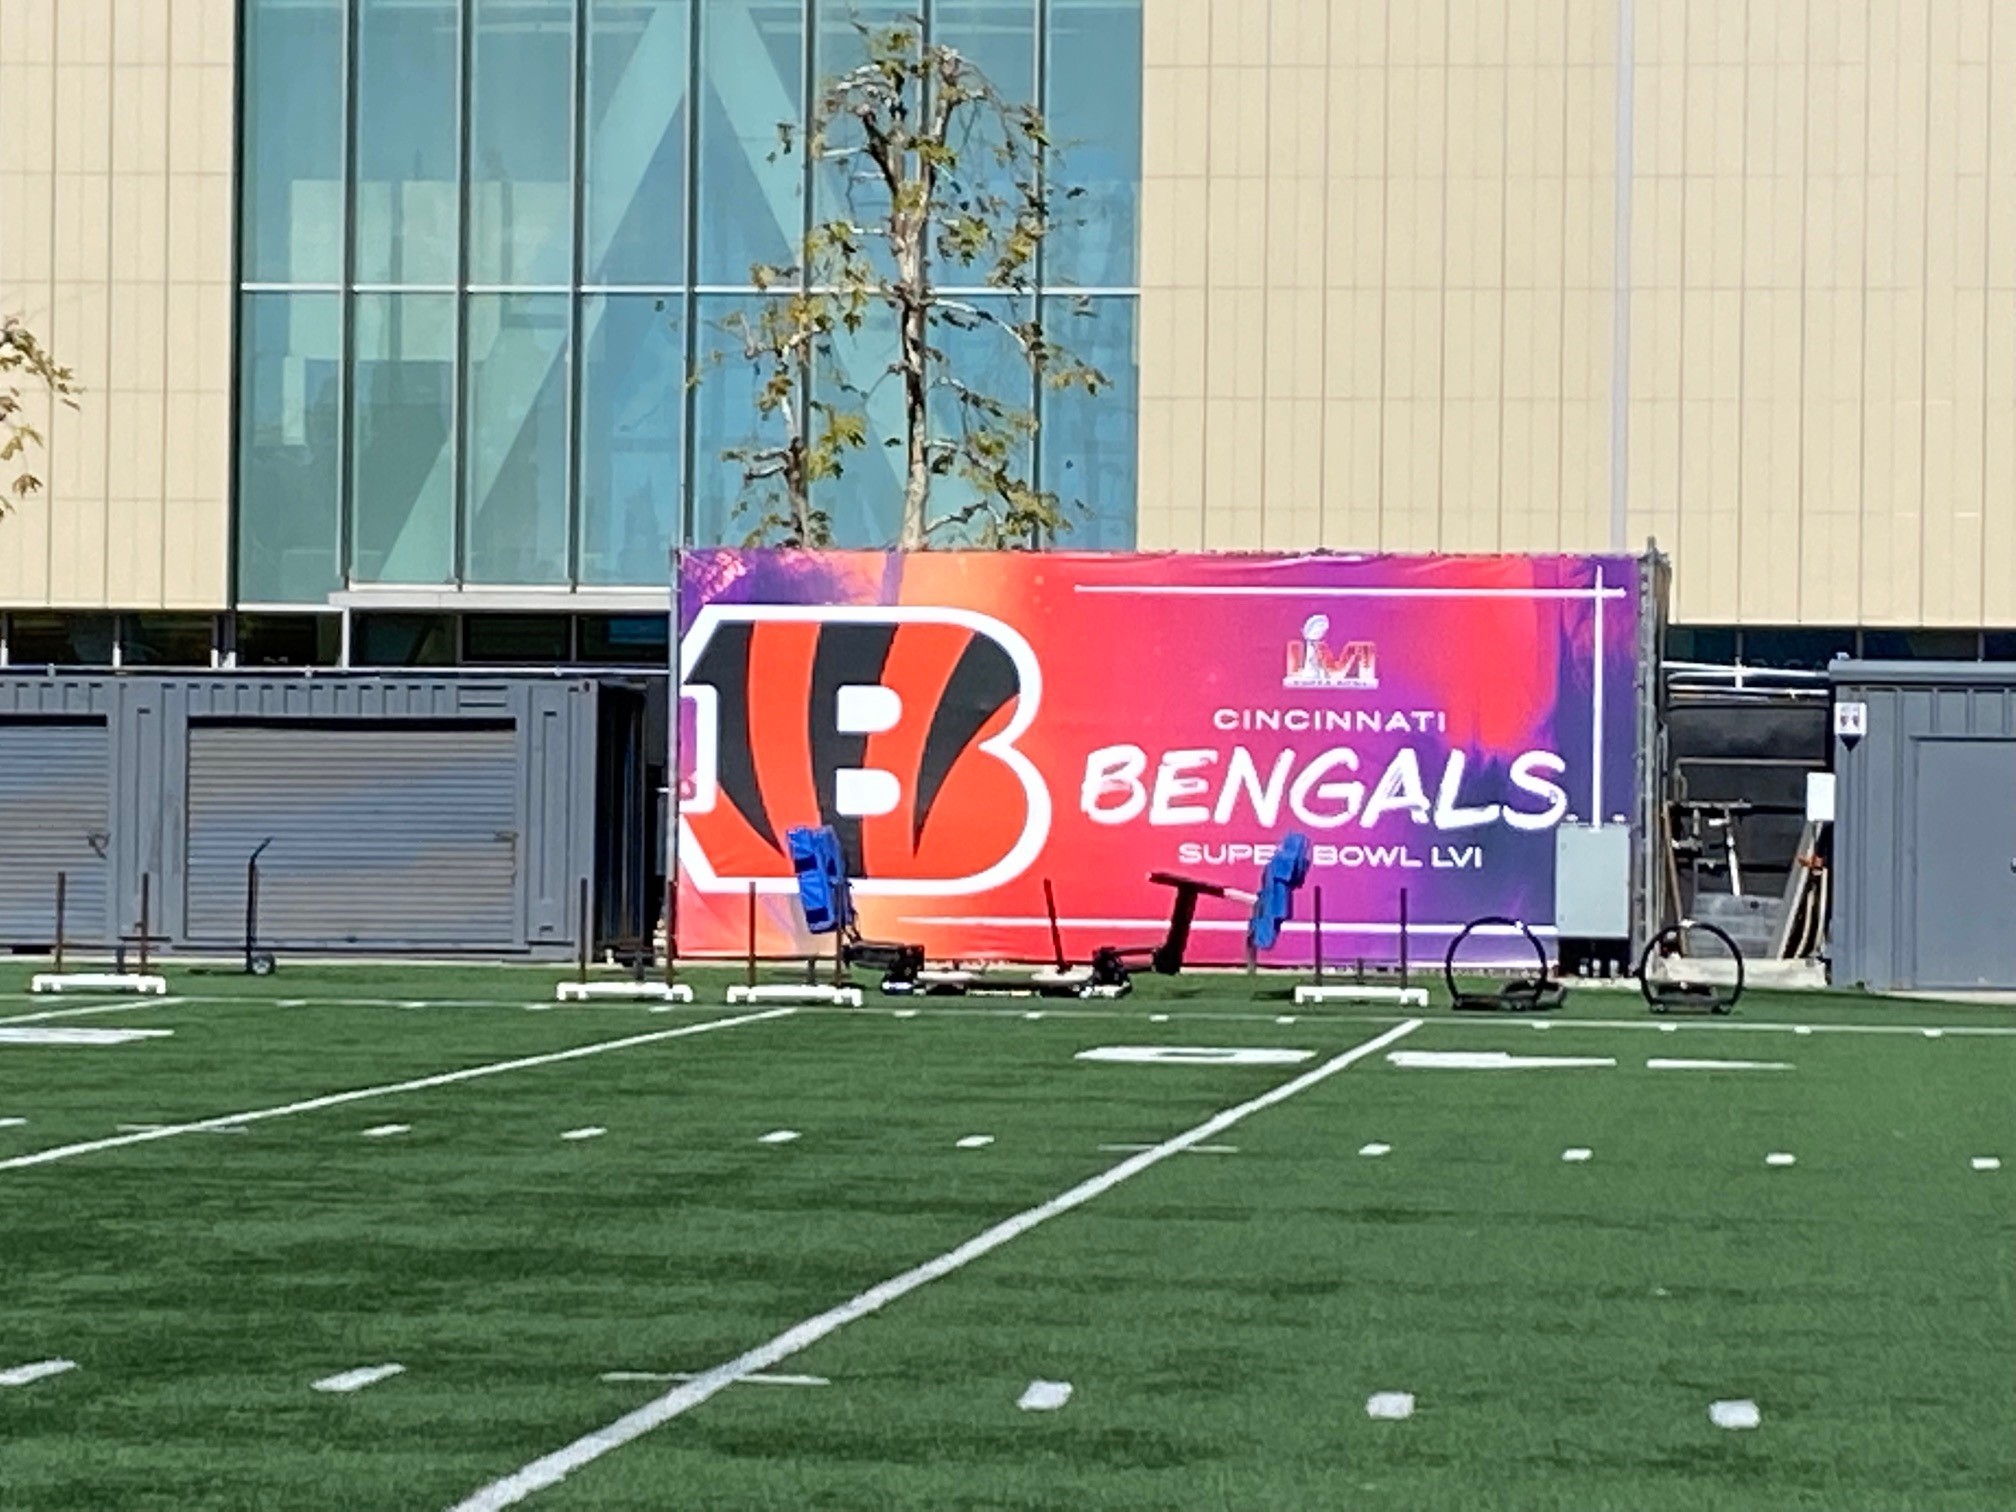 Super Bowl 56 Bengals Practice Facility